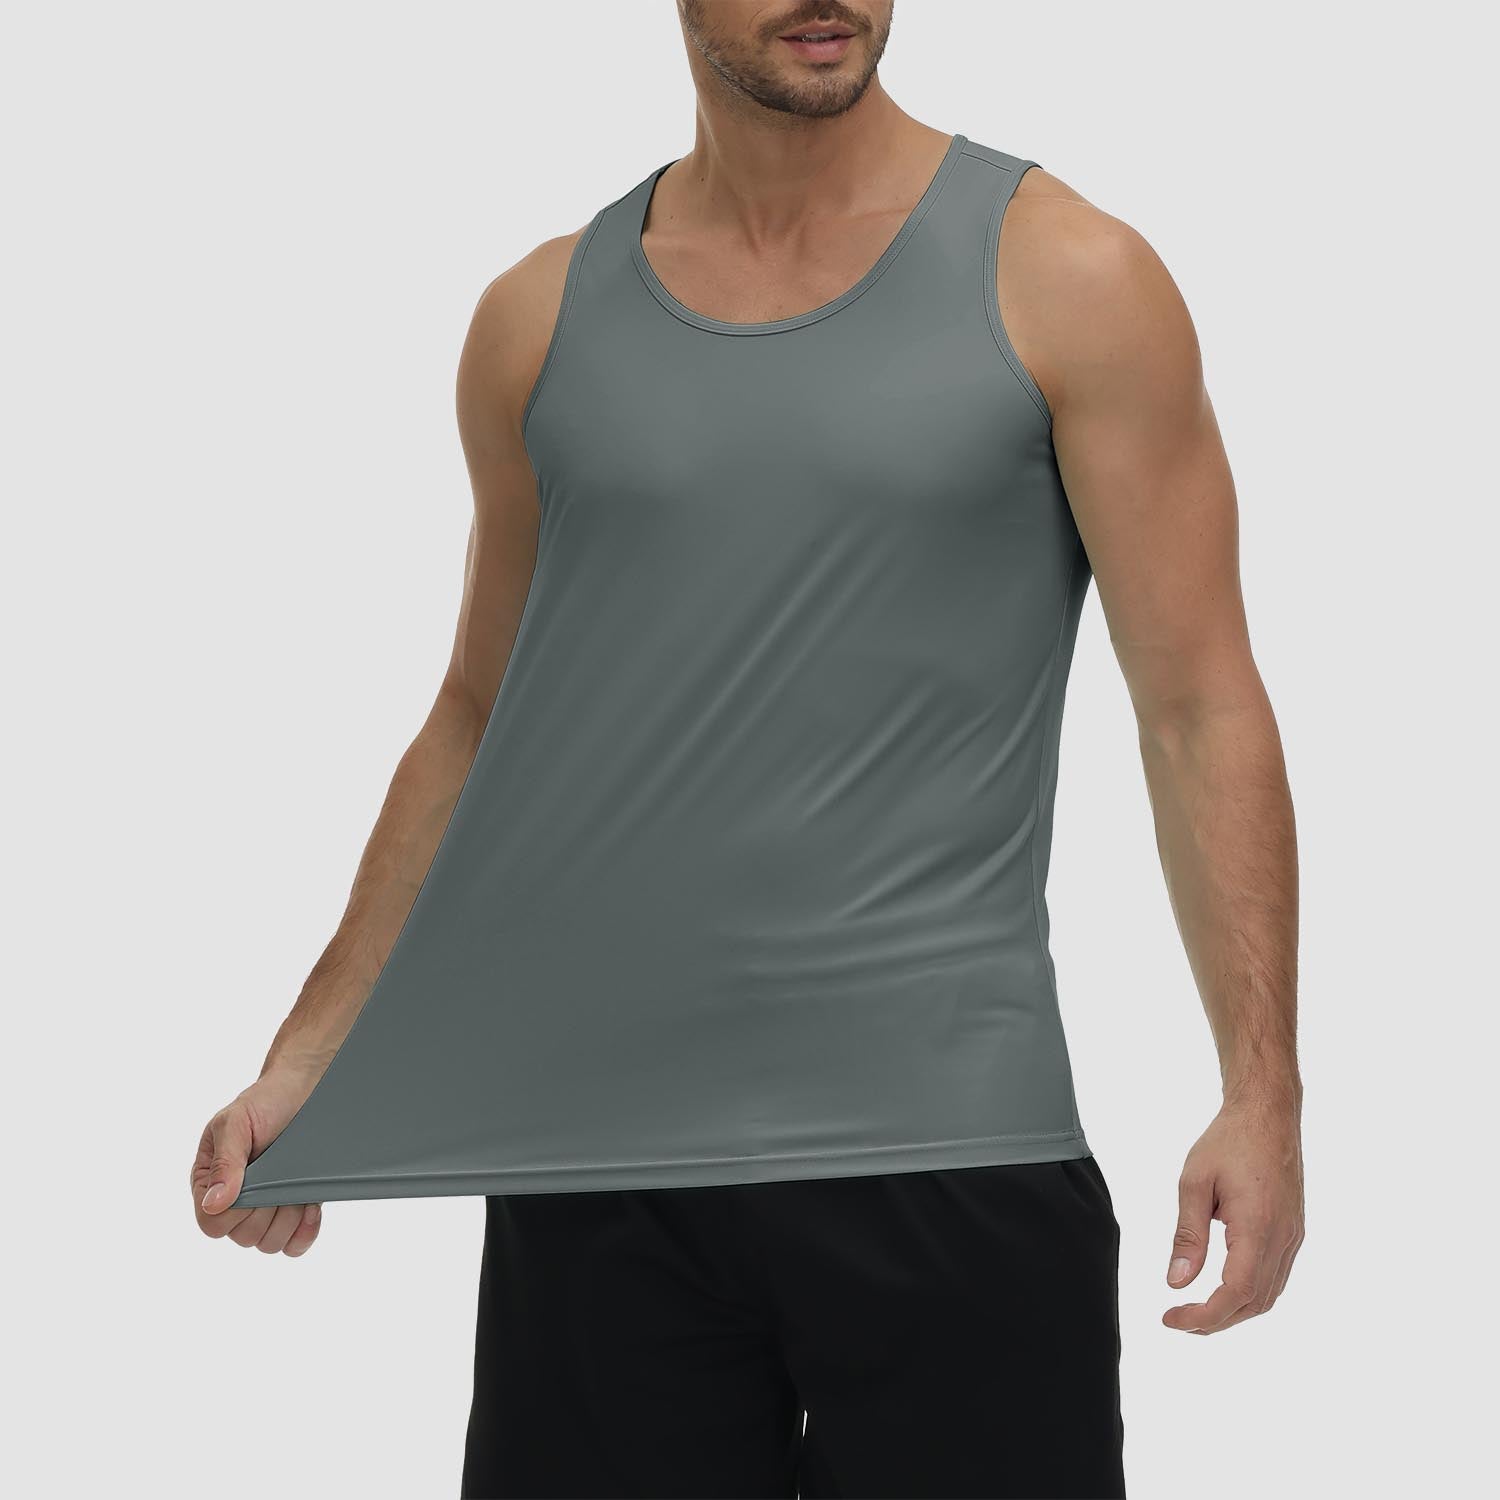 Training & Gym Tank Tops & Sleeveless Shirts.